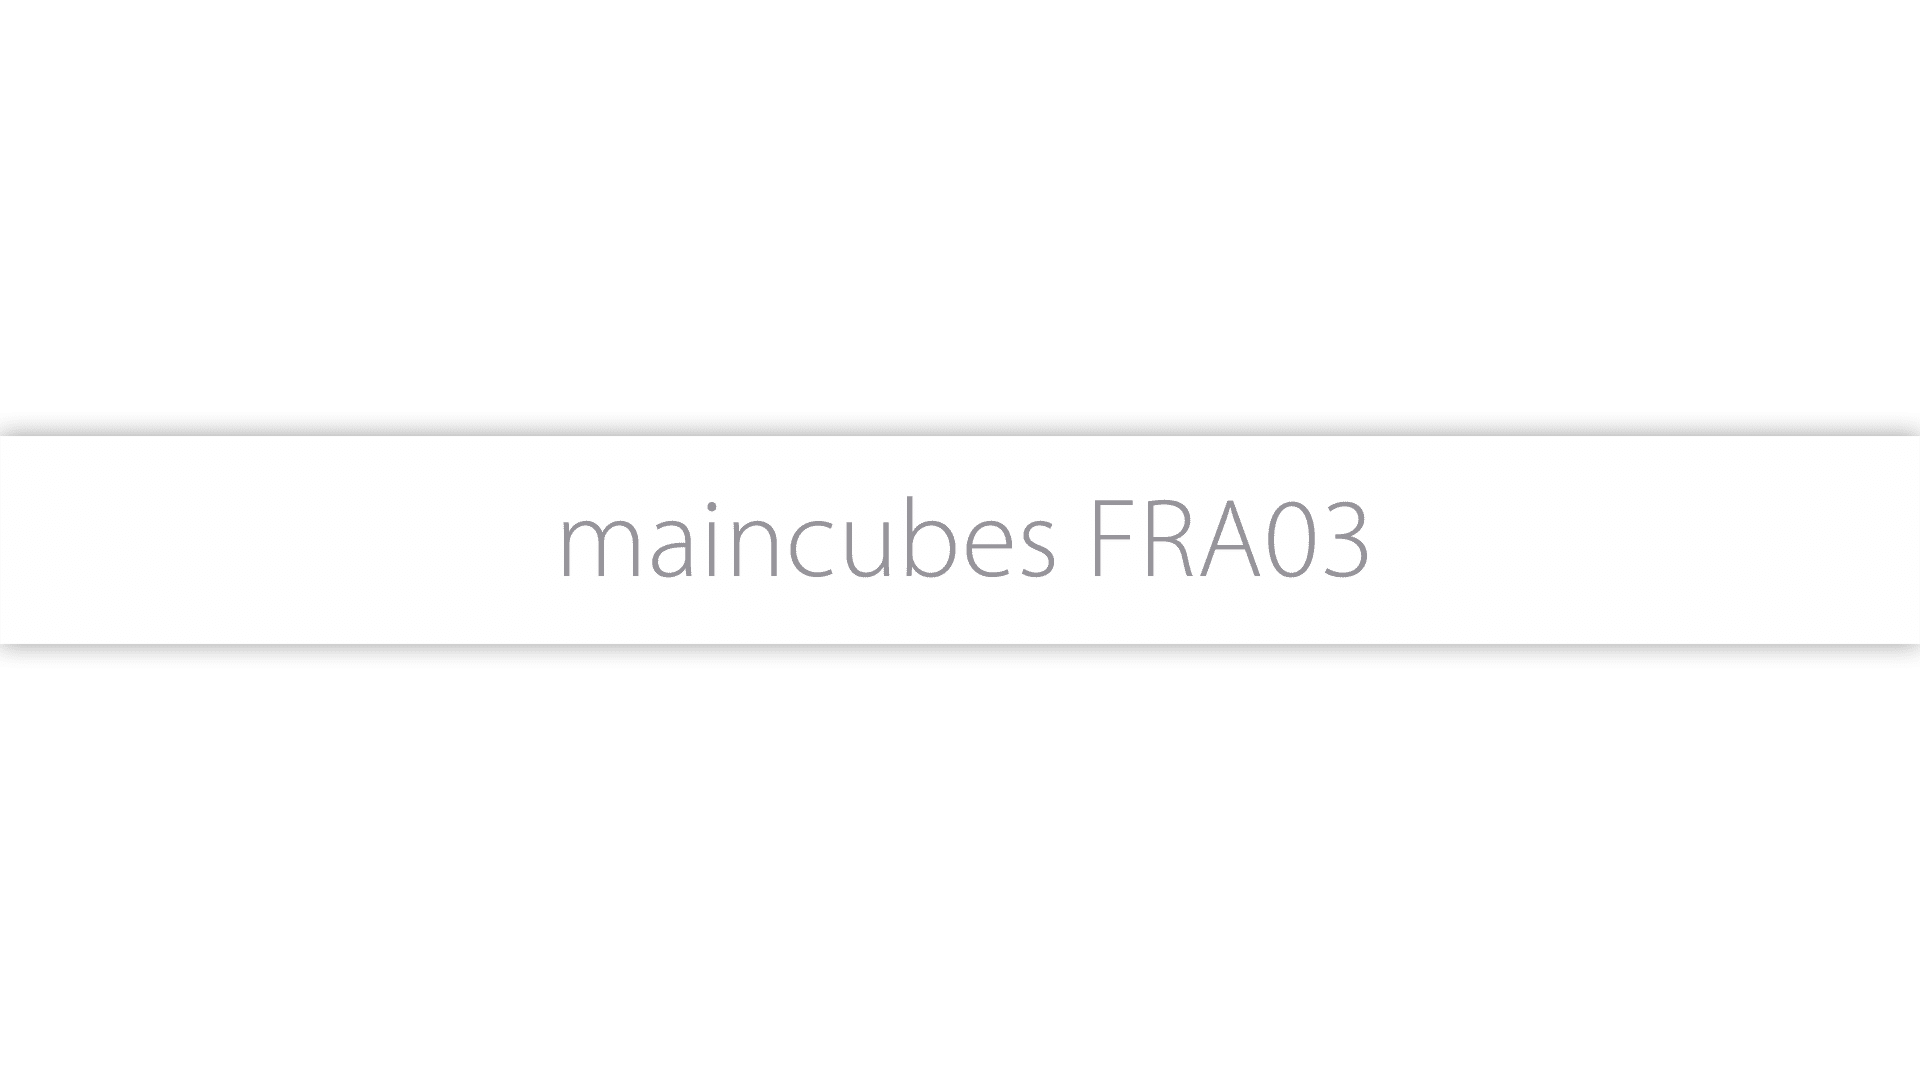 maincubes FRA03 Frankfurt 16 MW capacity